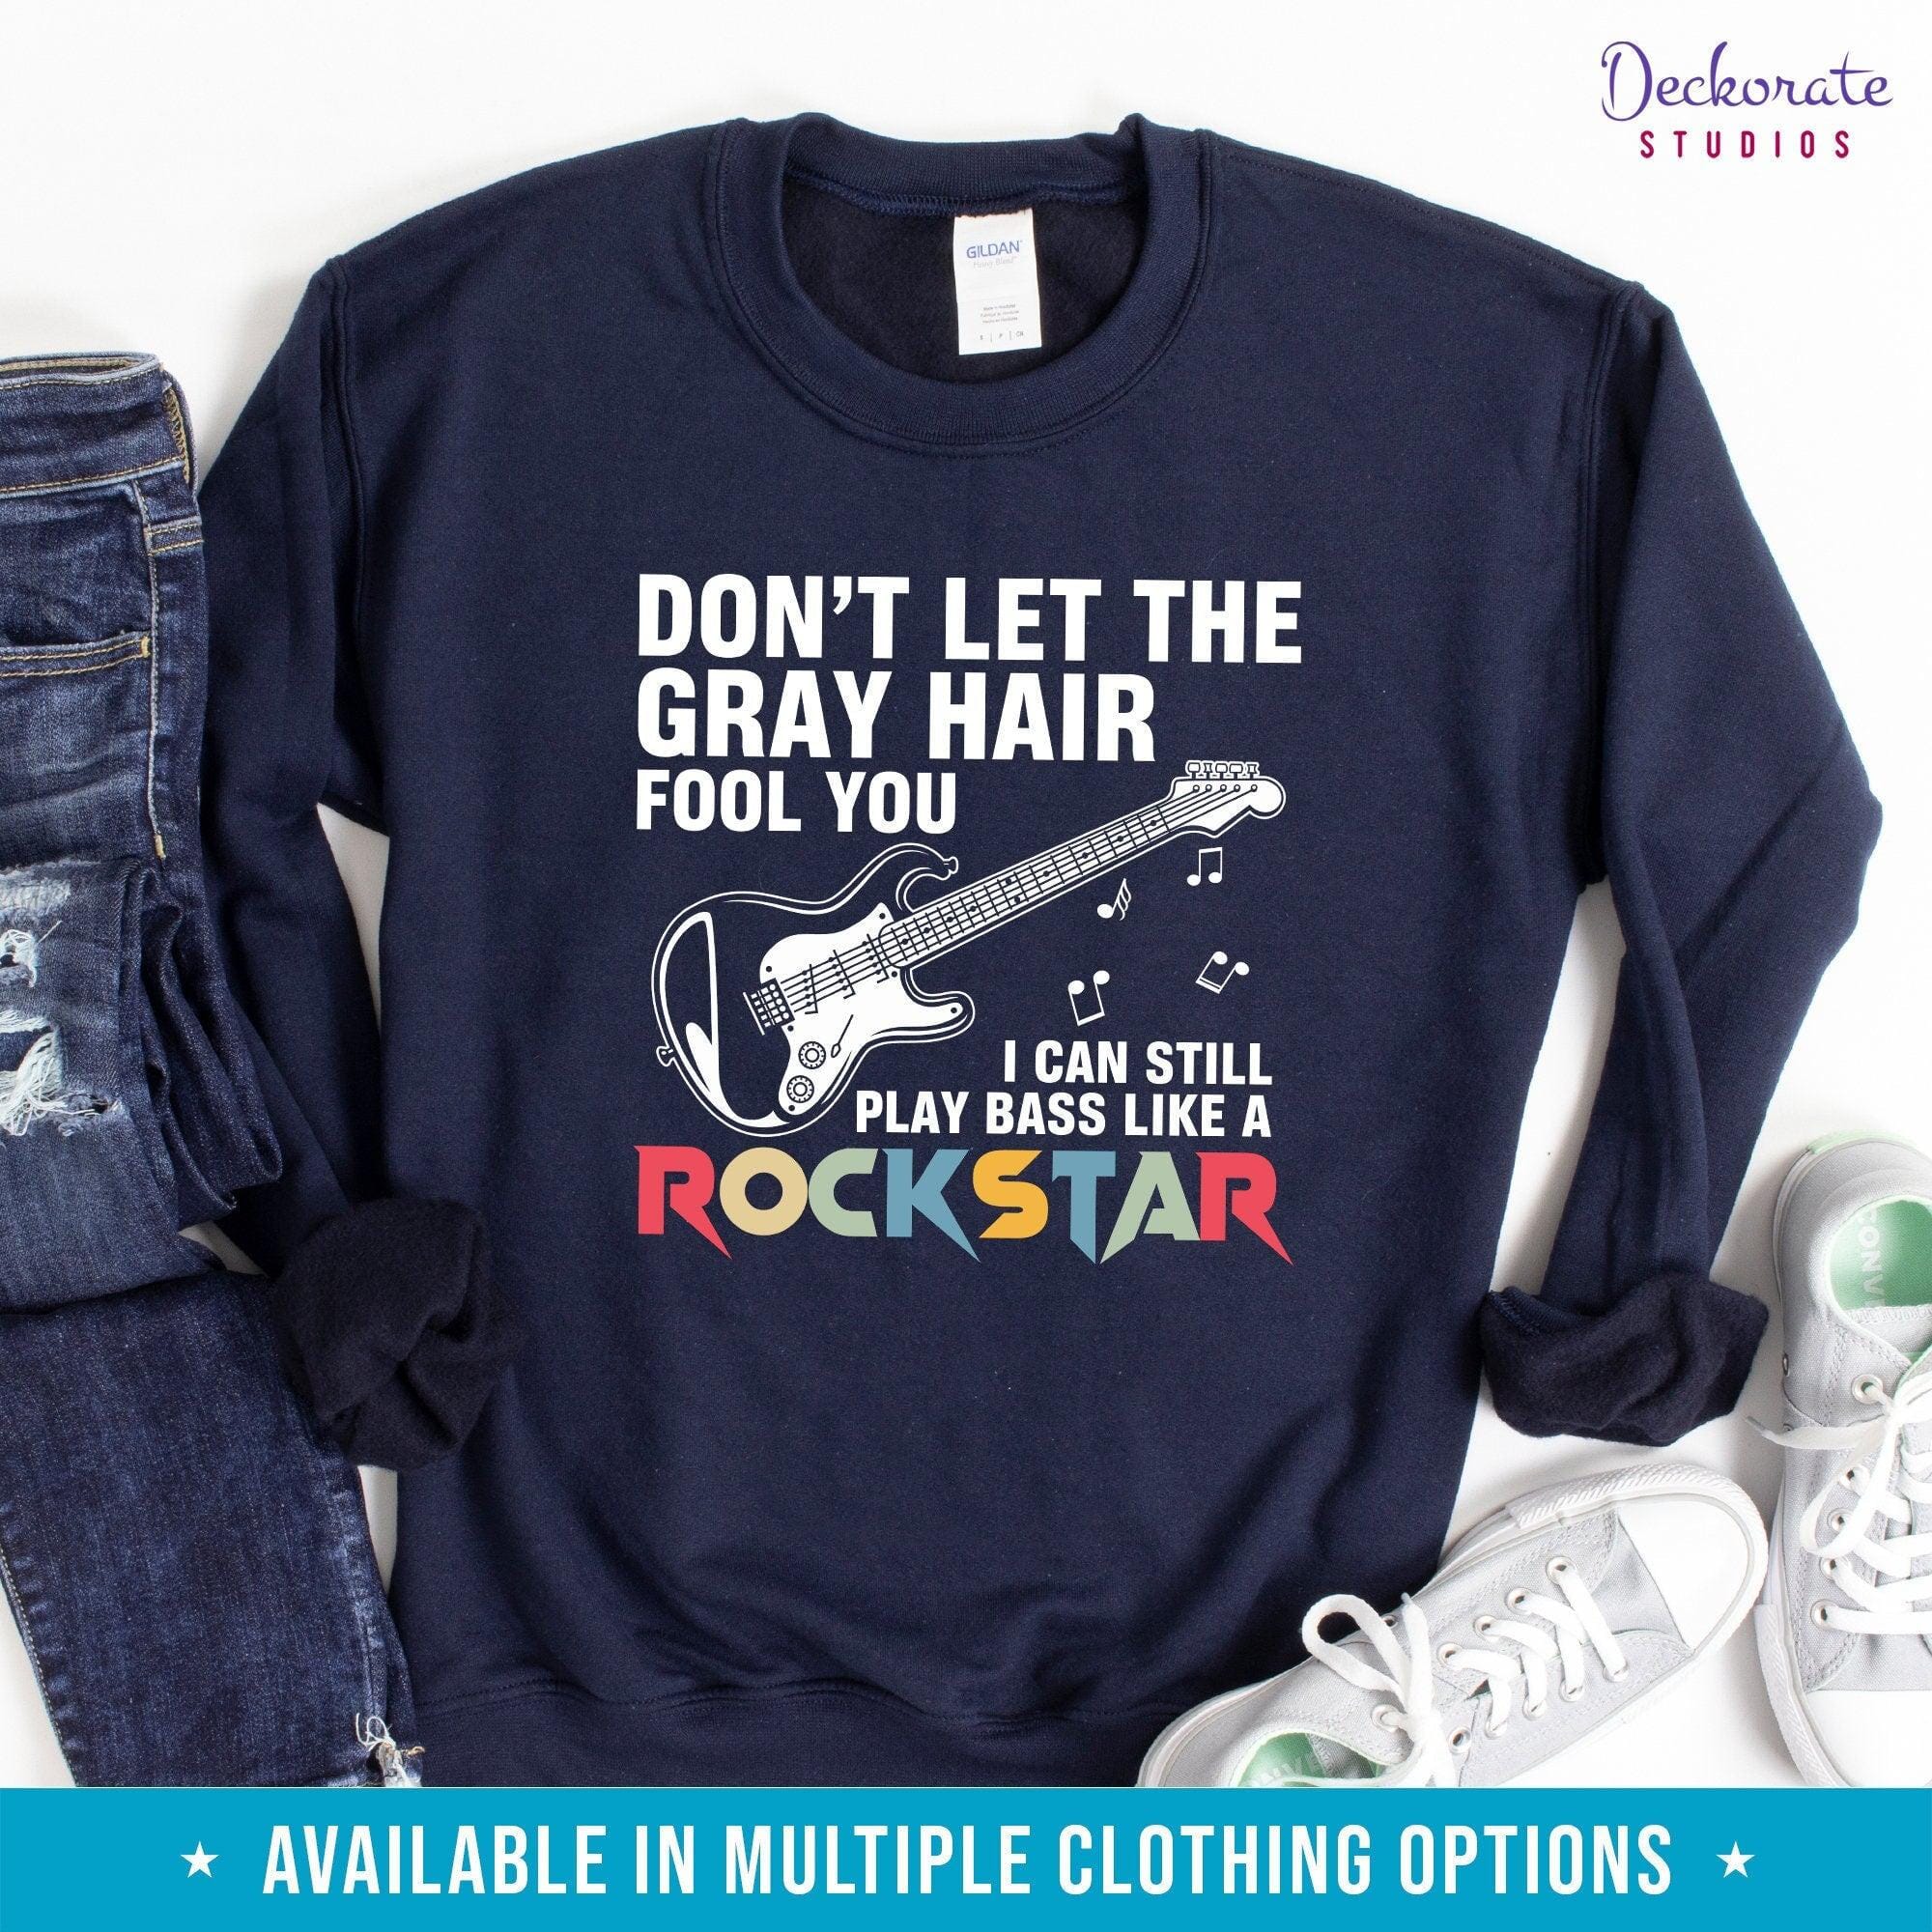 Guitar Teacher Shirt, Musician Birthday Gift-Clothing:Gender-Neutral Adult Clothing:Tops & Tees:T-shirts:Graphic Tees-DecksyDesigns